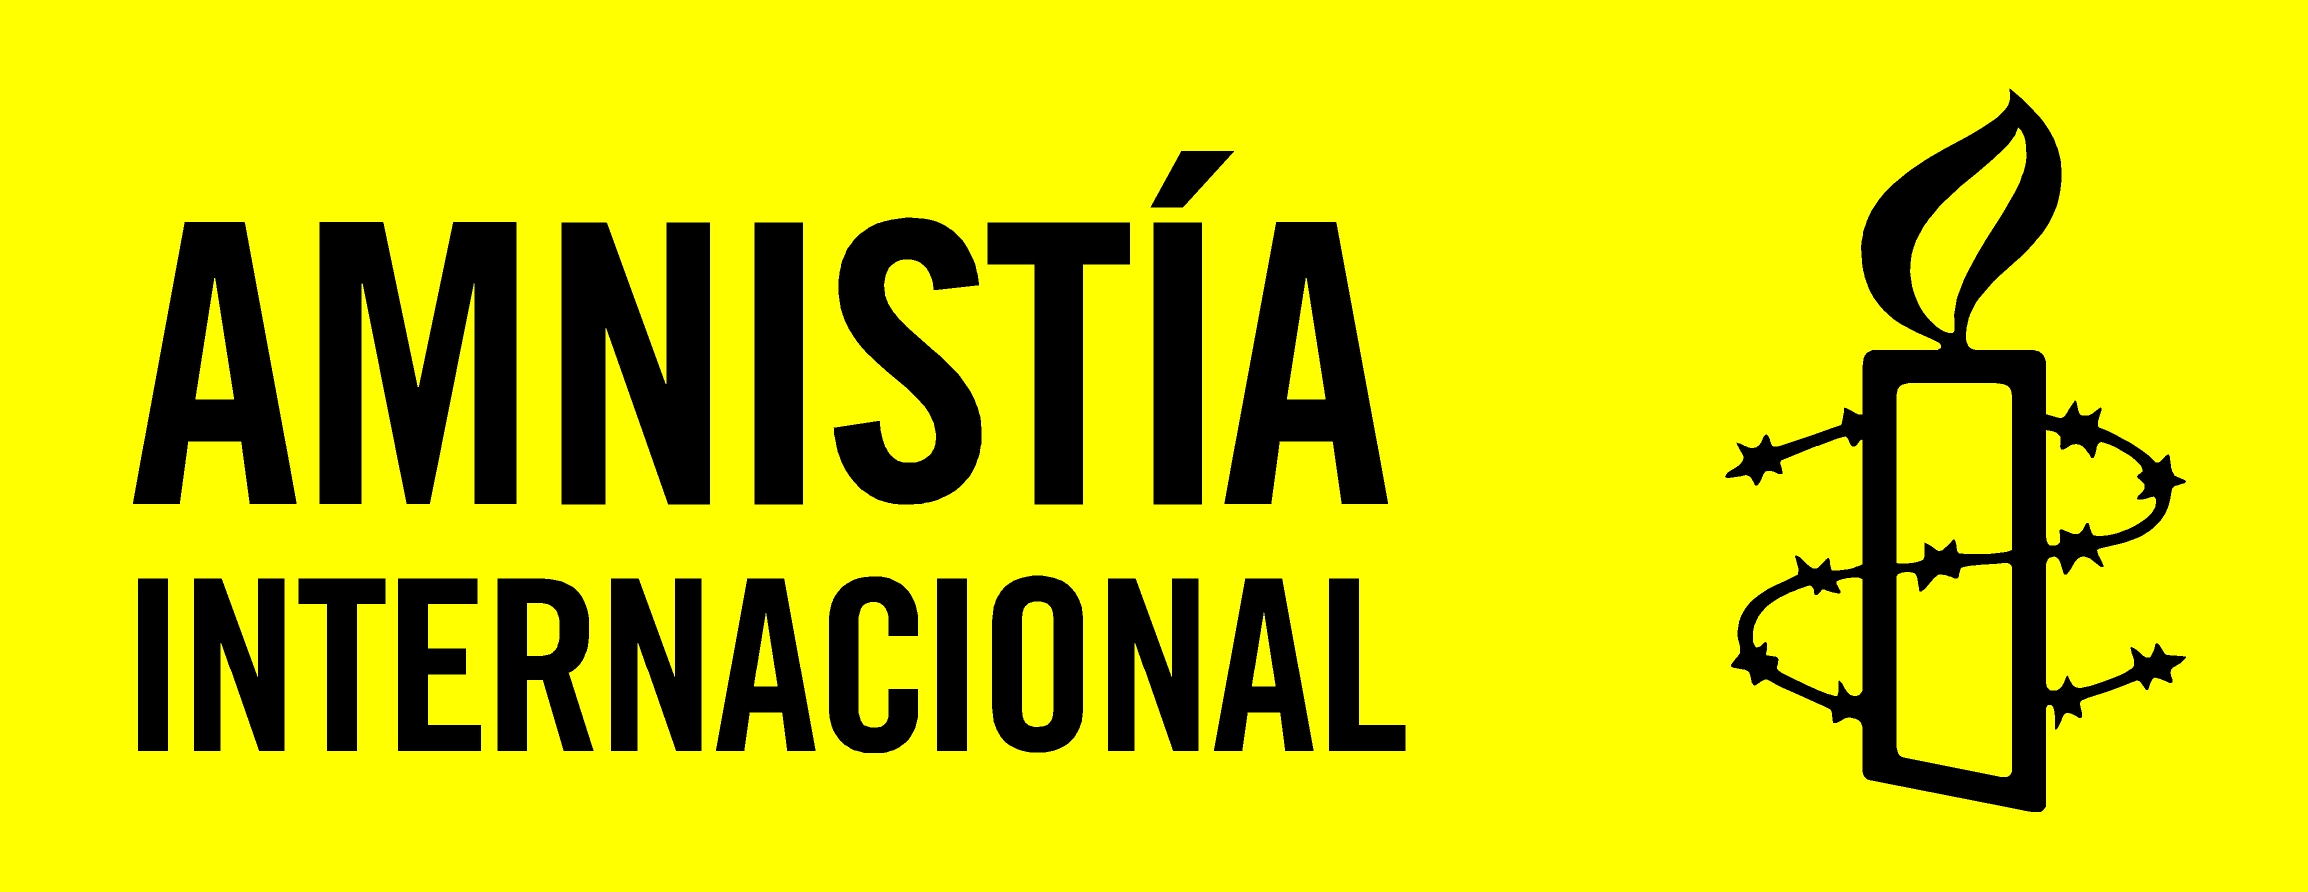 Amnistía Internacional Logo photo - 1